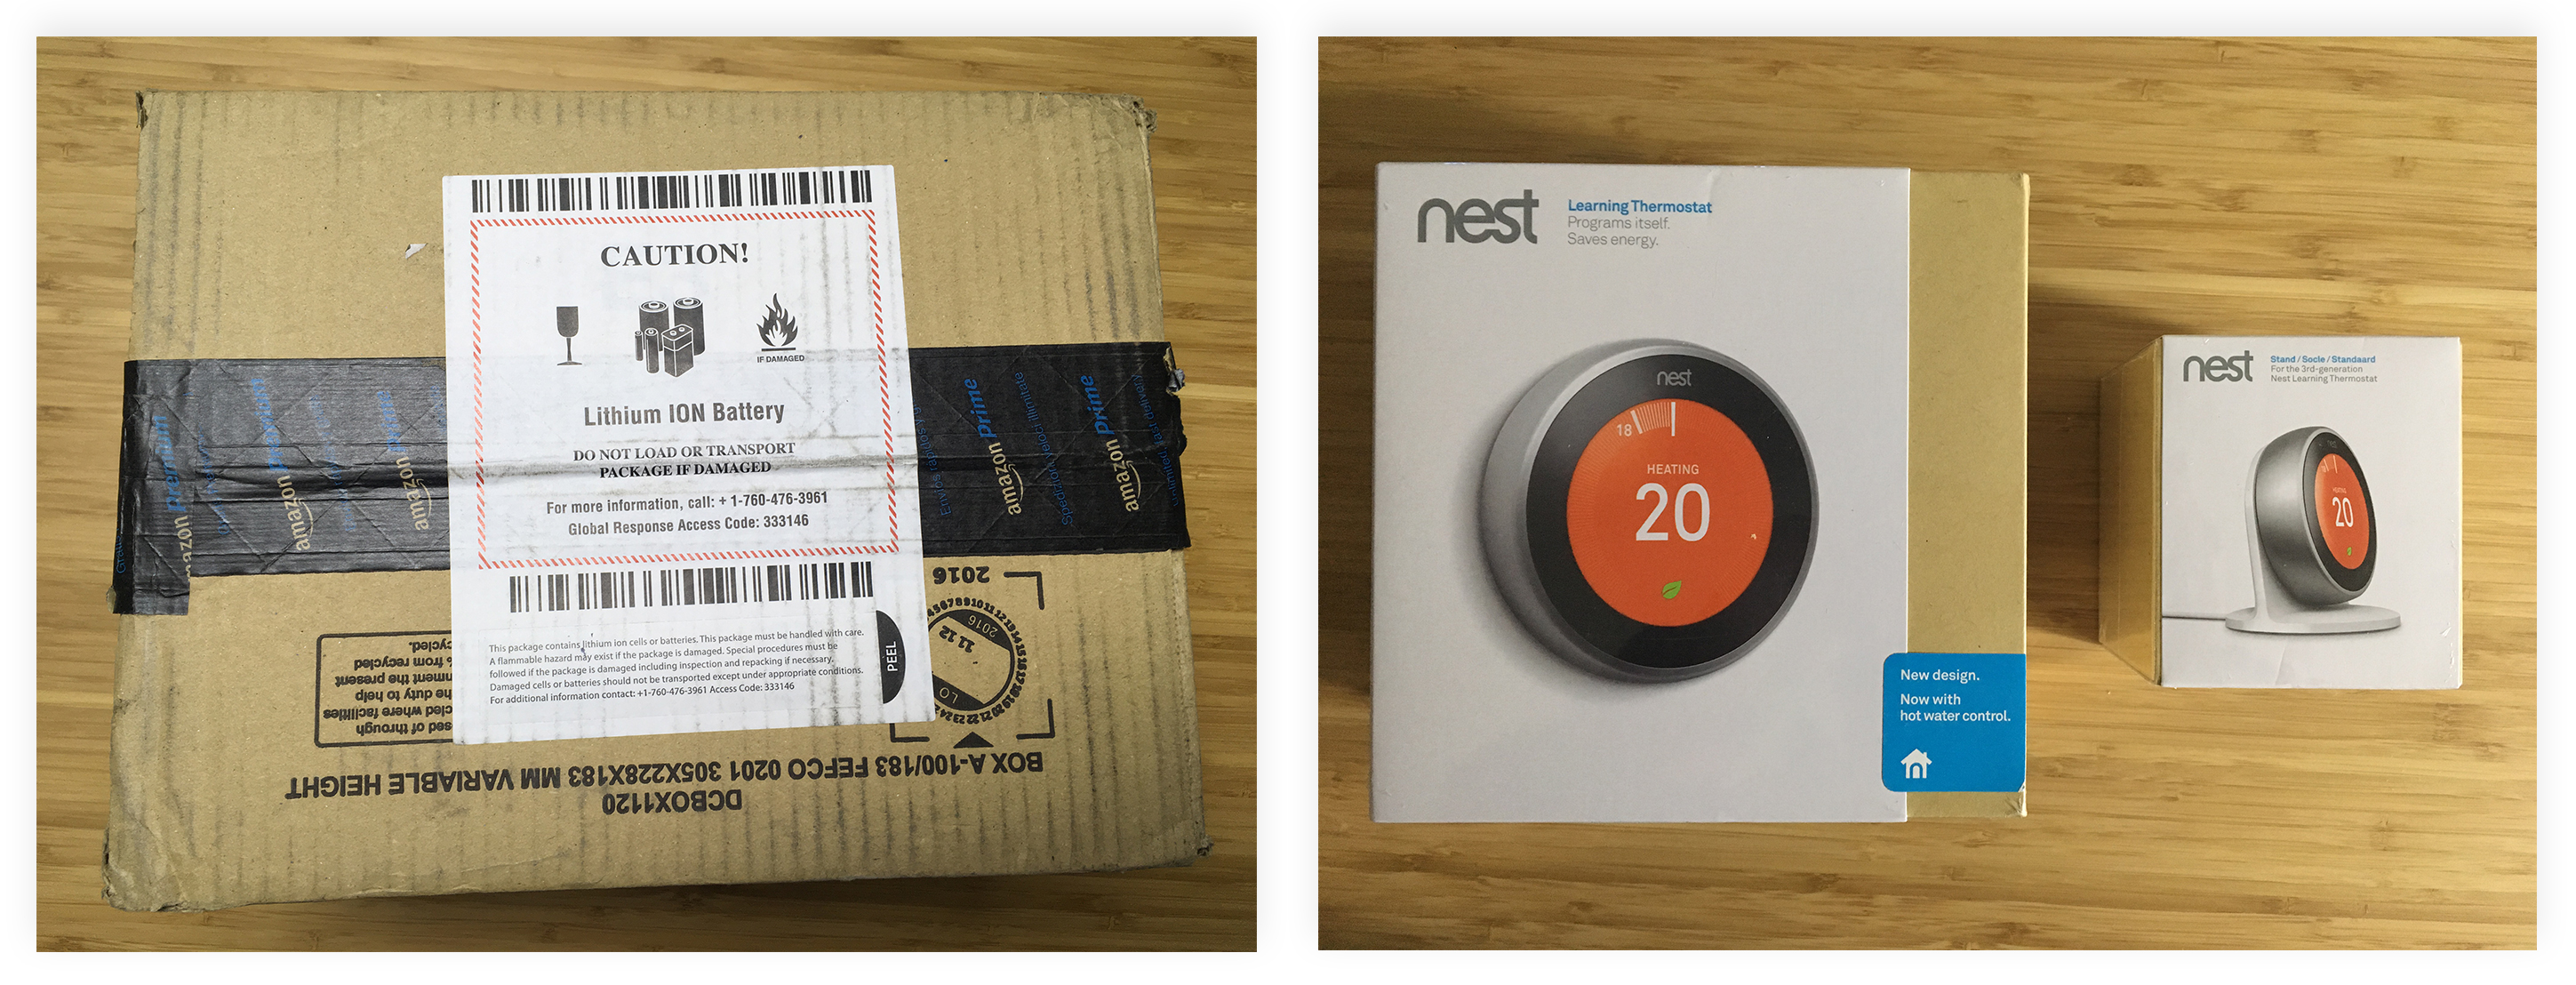 nest-box-sum-0